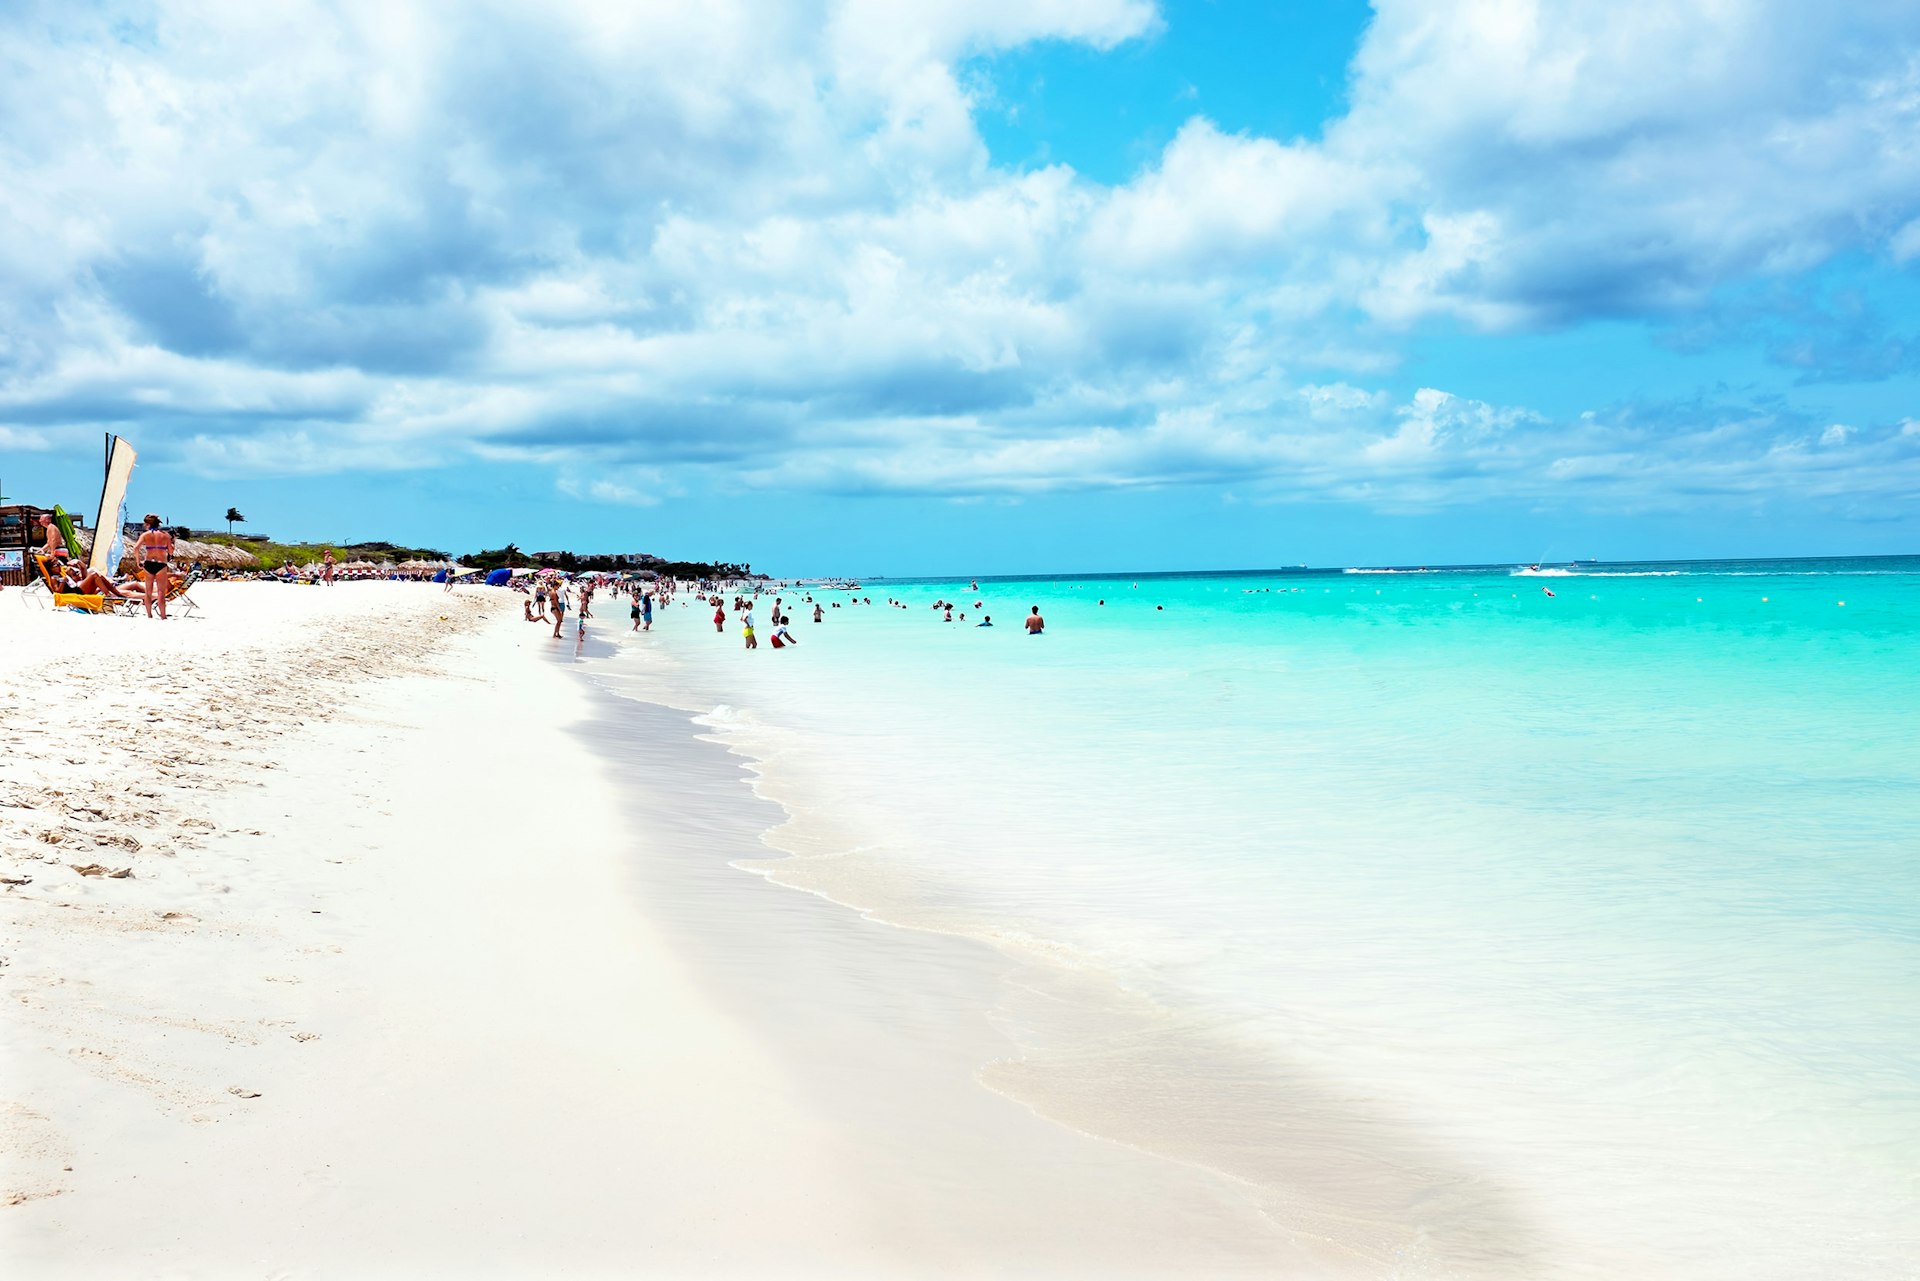 View of Eagle beach on Aruba island in the Caribbean Sea